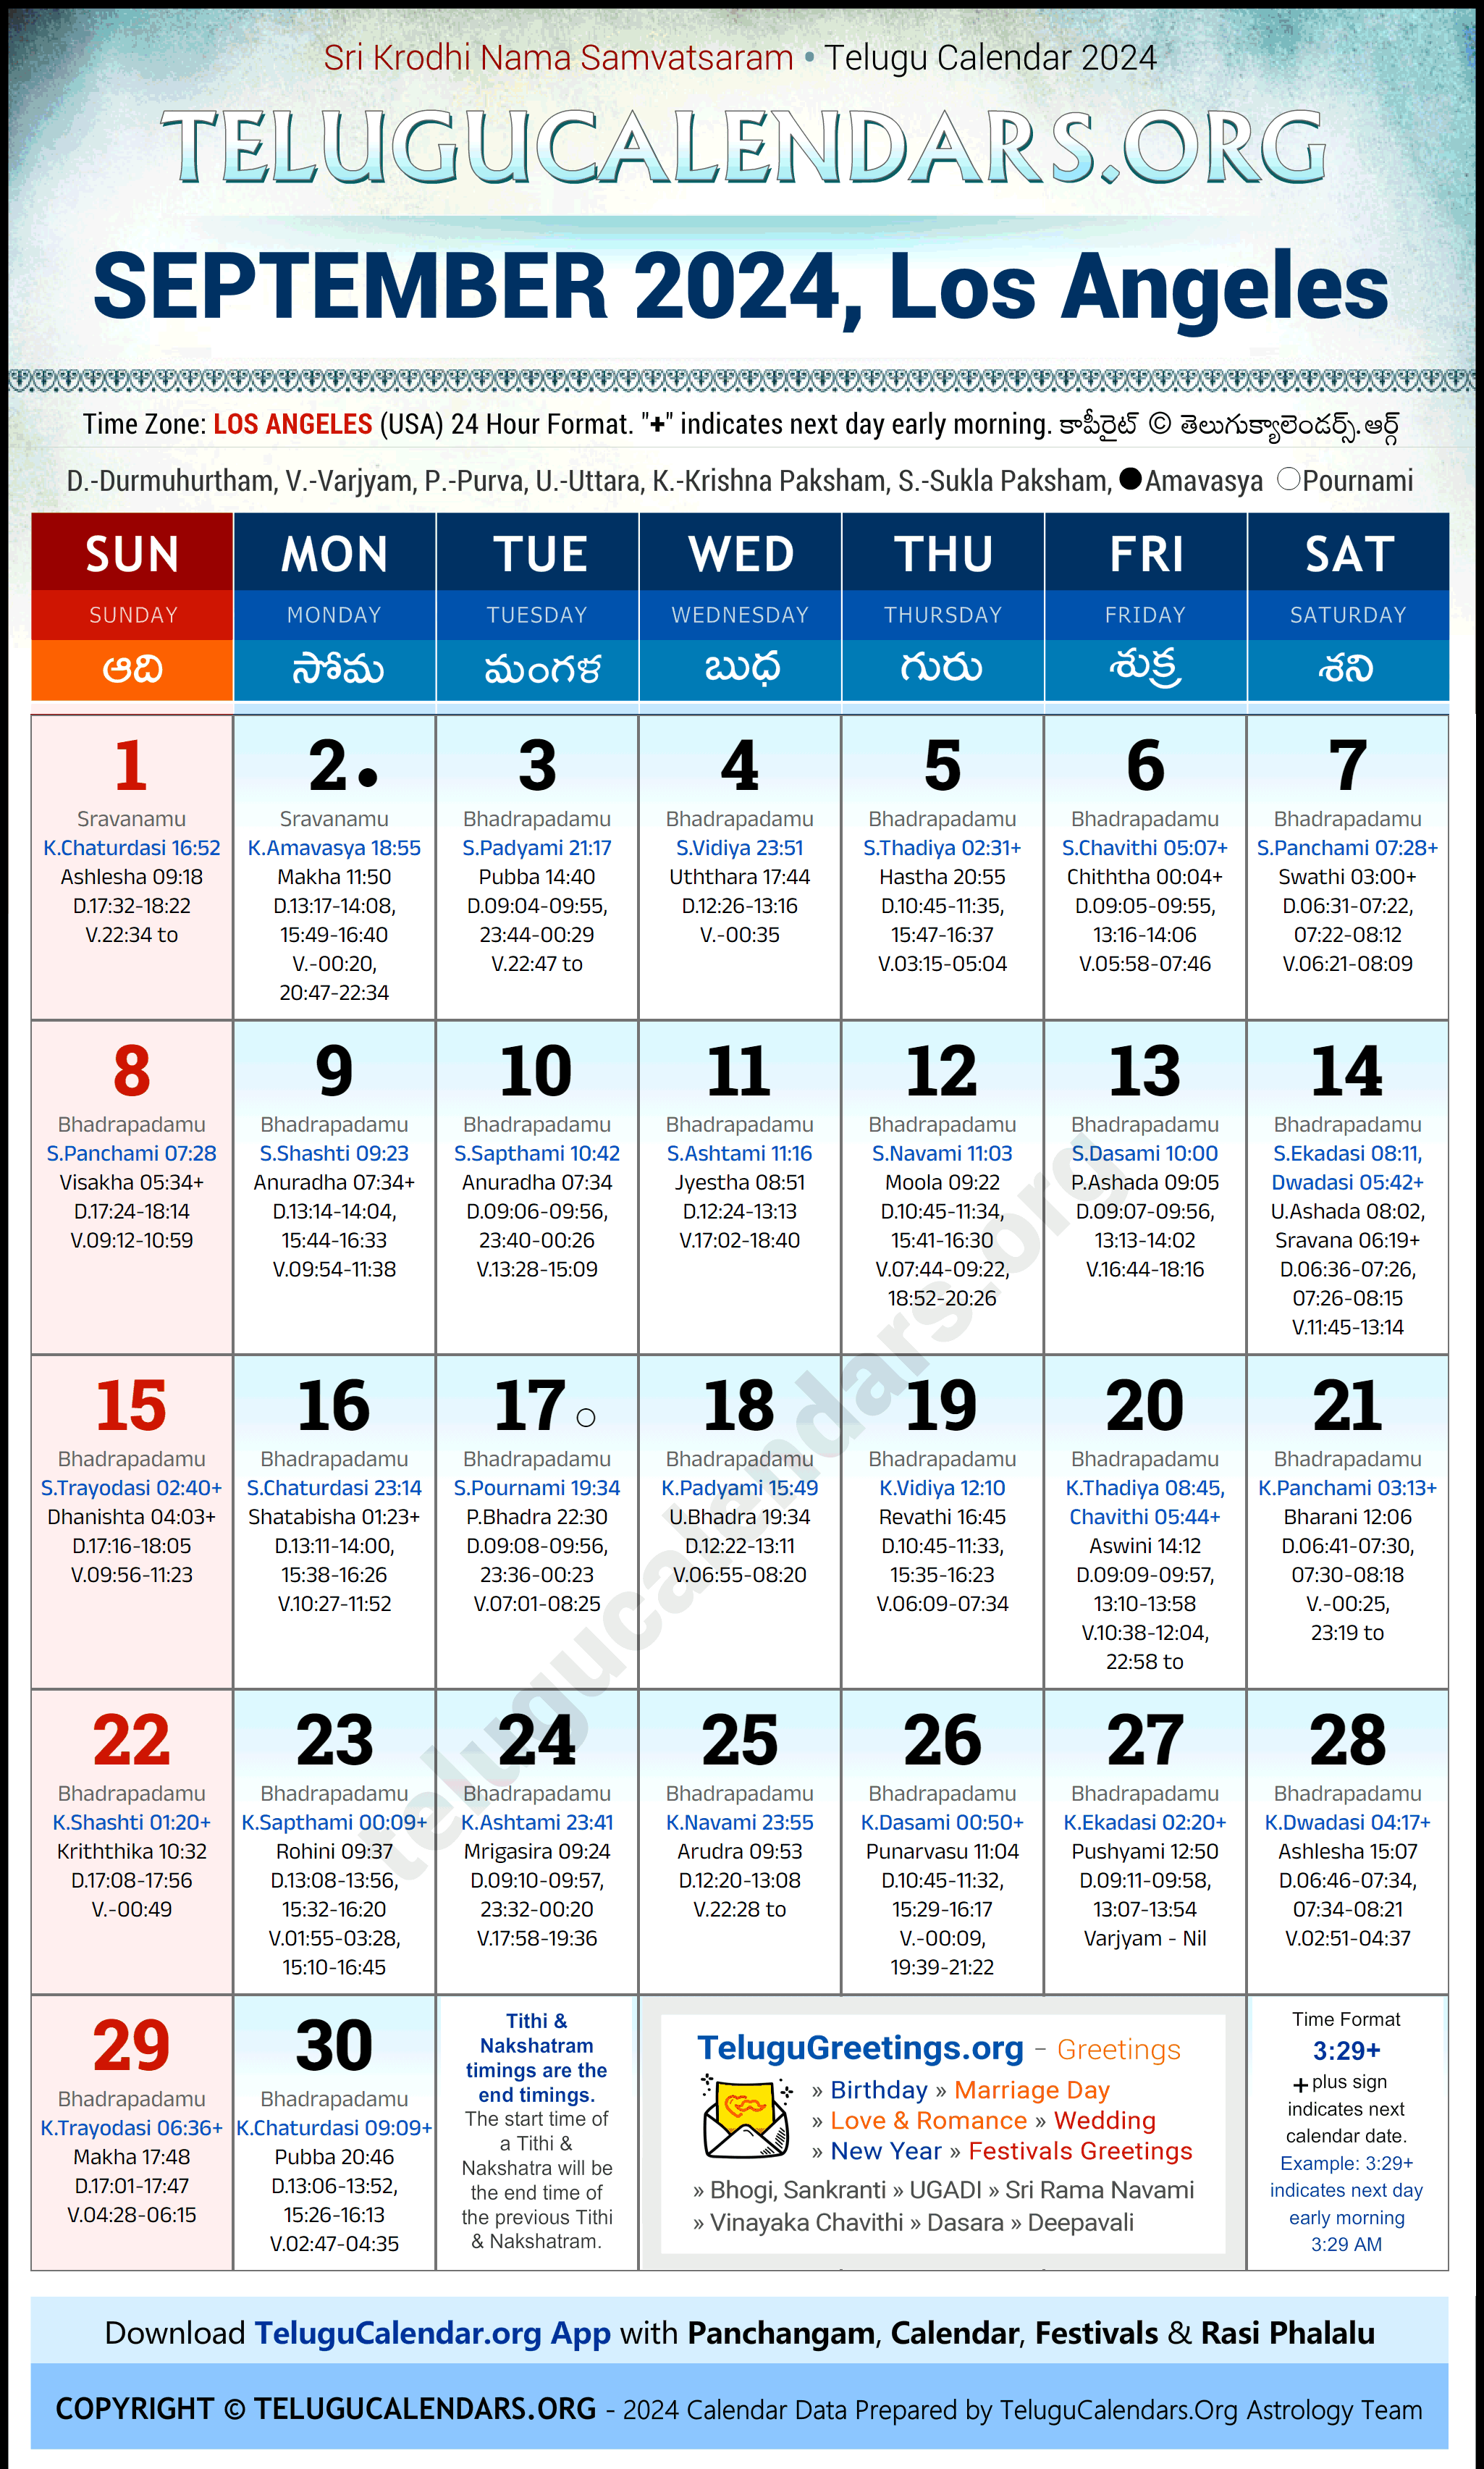 Telugu Calendar 2024 September Festivals for Los Angeles